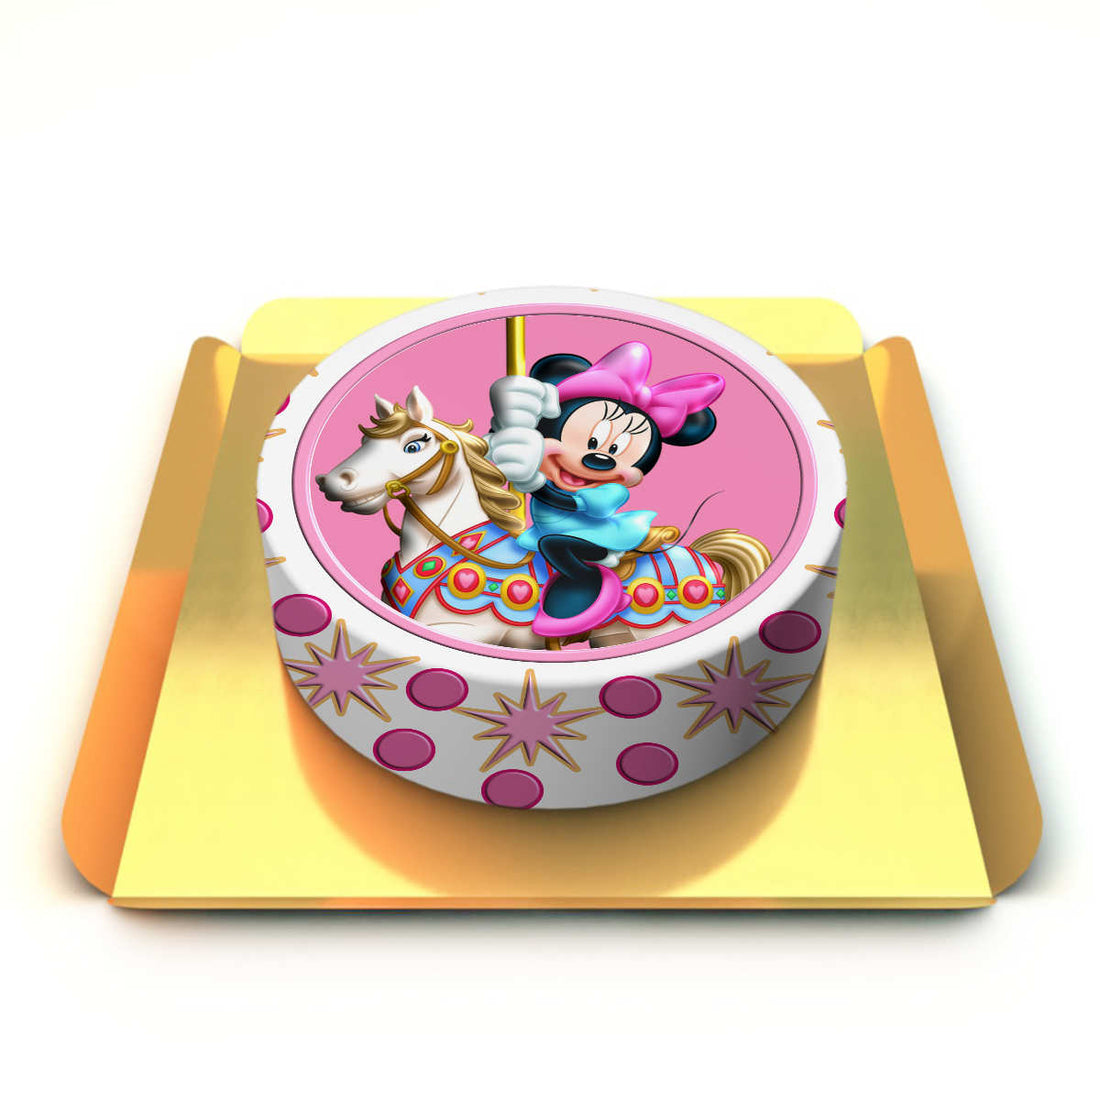 Minnie mouse ve atlı karınca pasta